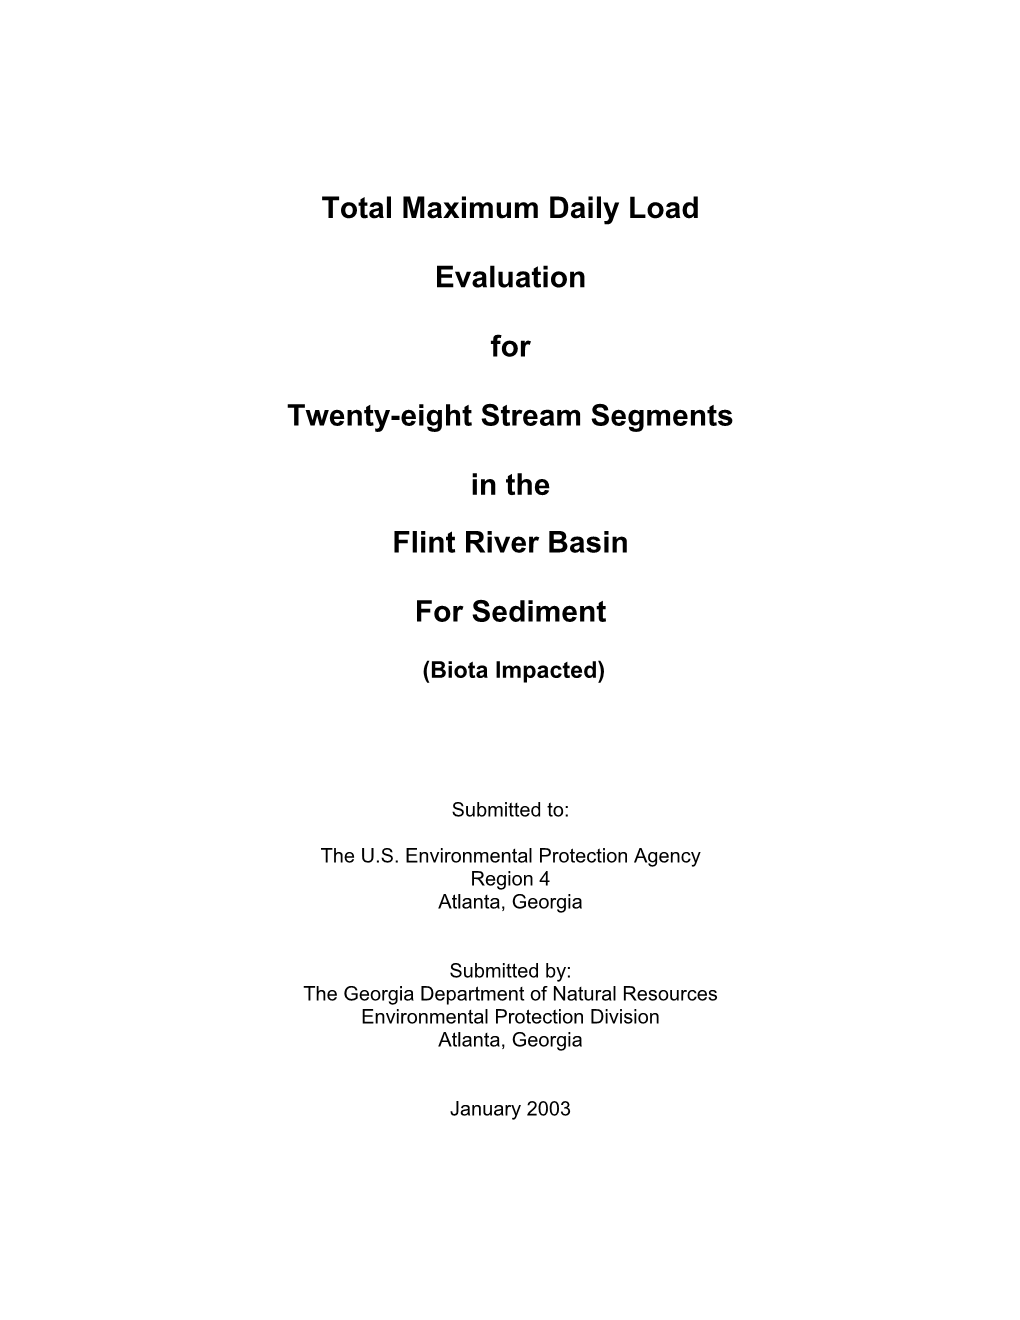 Total Maximum Daily Load Evaluation for Twenty-Eight Stream Segments